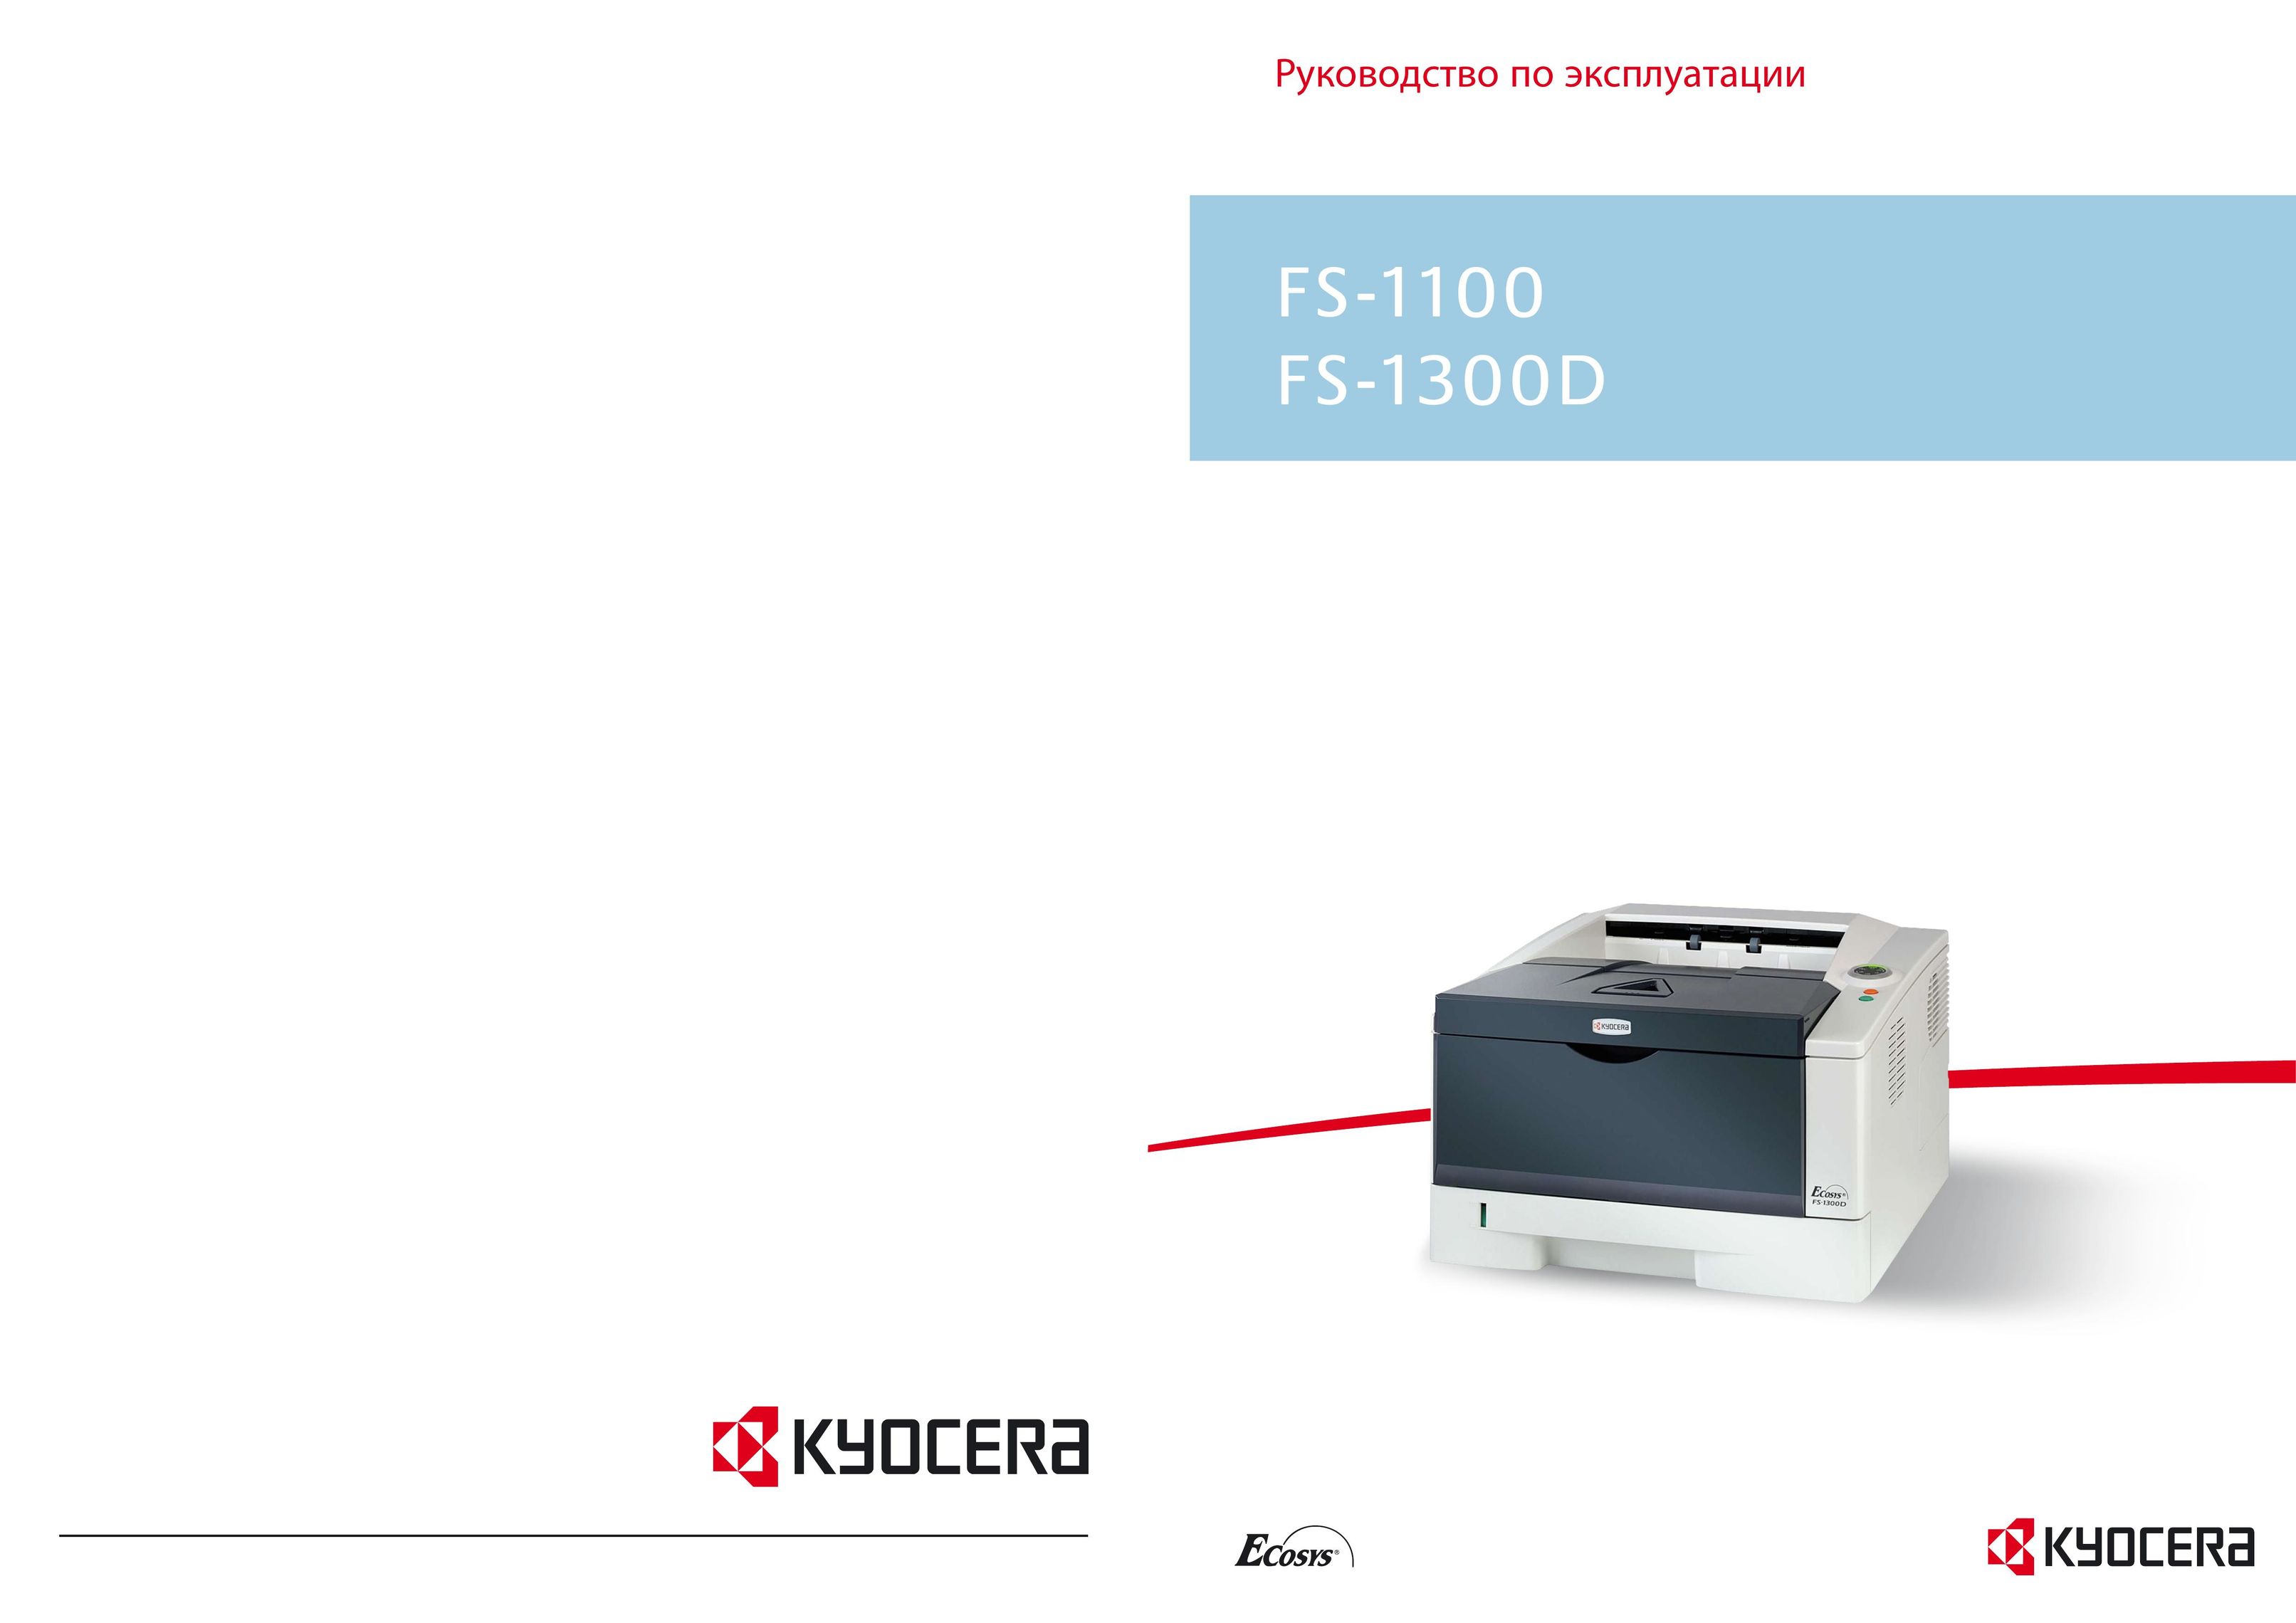 Kyocera FS-1300D All in One Printer User Manual